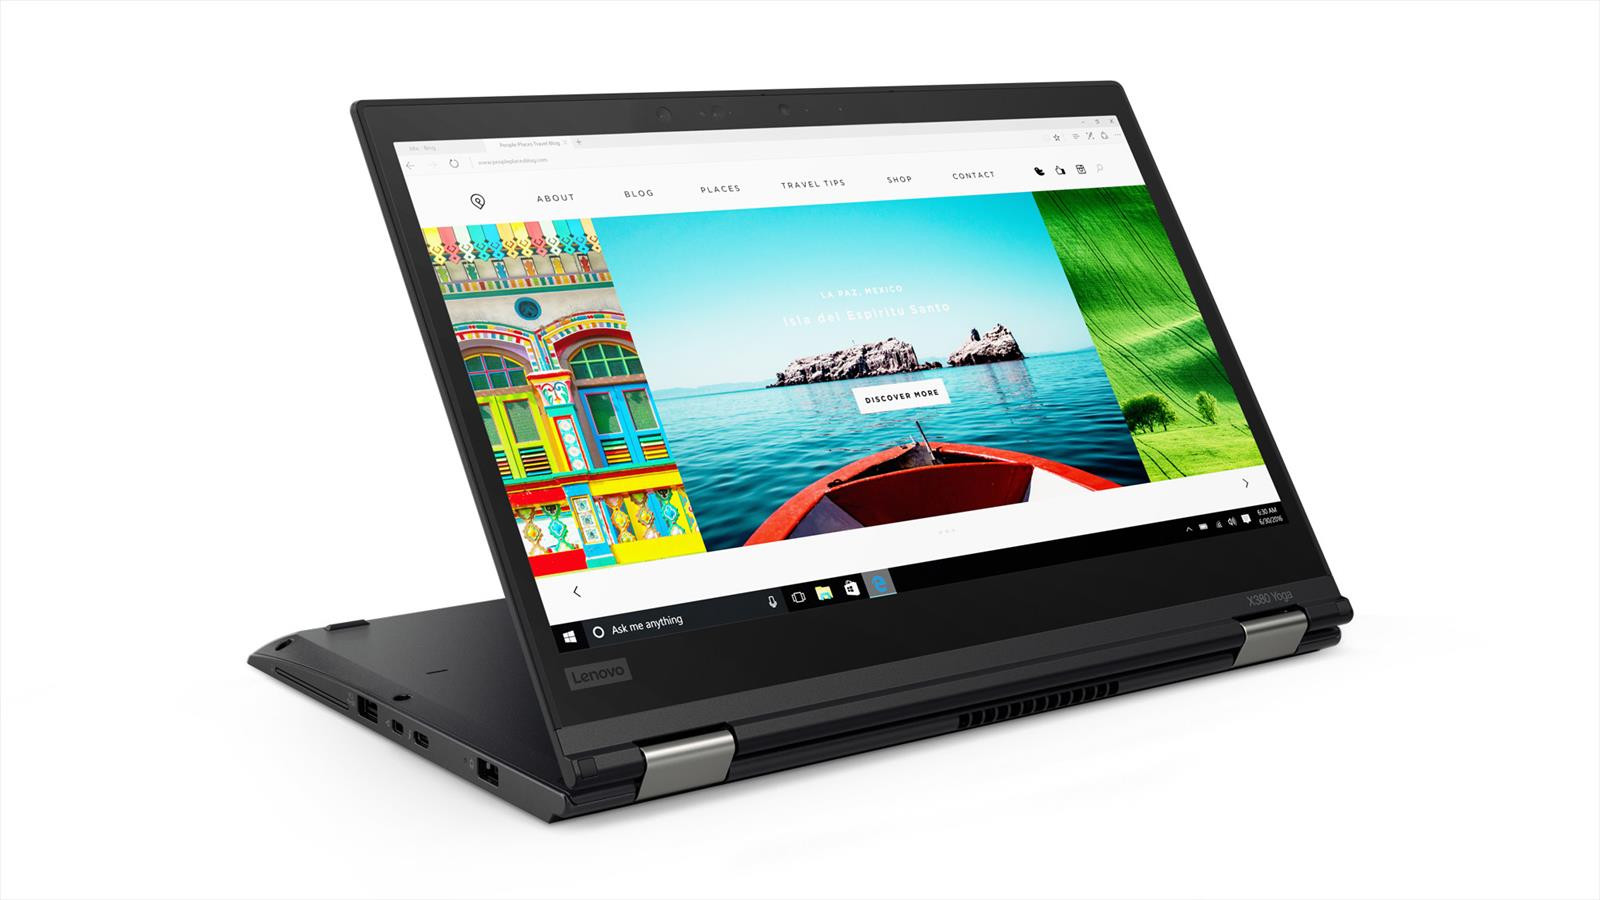 Lenovo ThinkPad X380 Yoga | 13,3" | i7-8550U | 16GB RAM | 512GB SSD | Win 10 Pro | DE